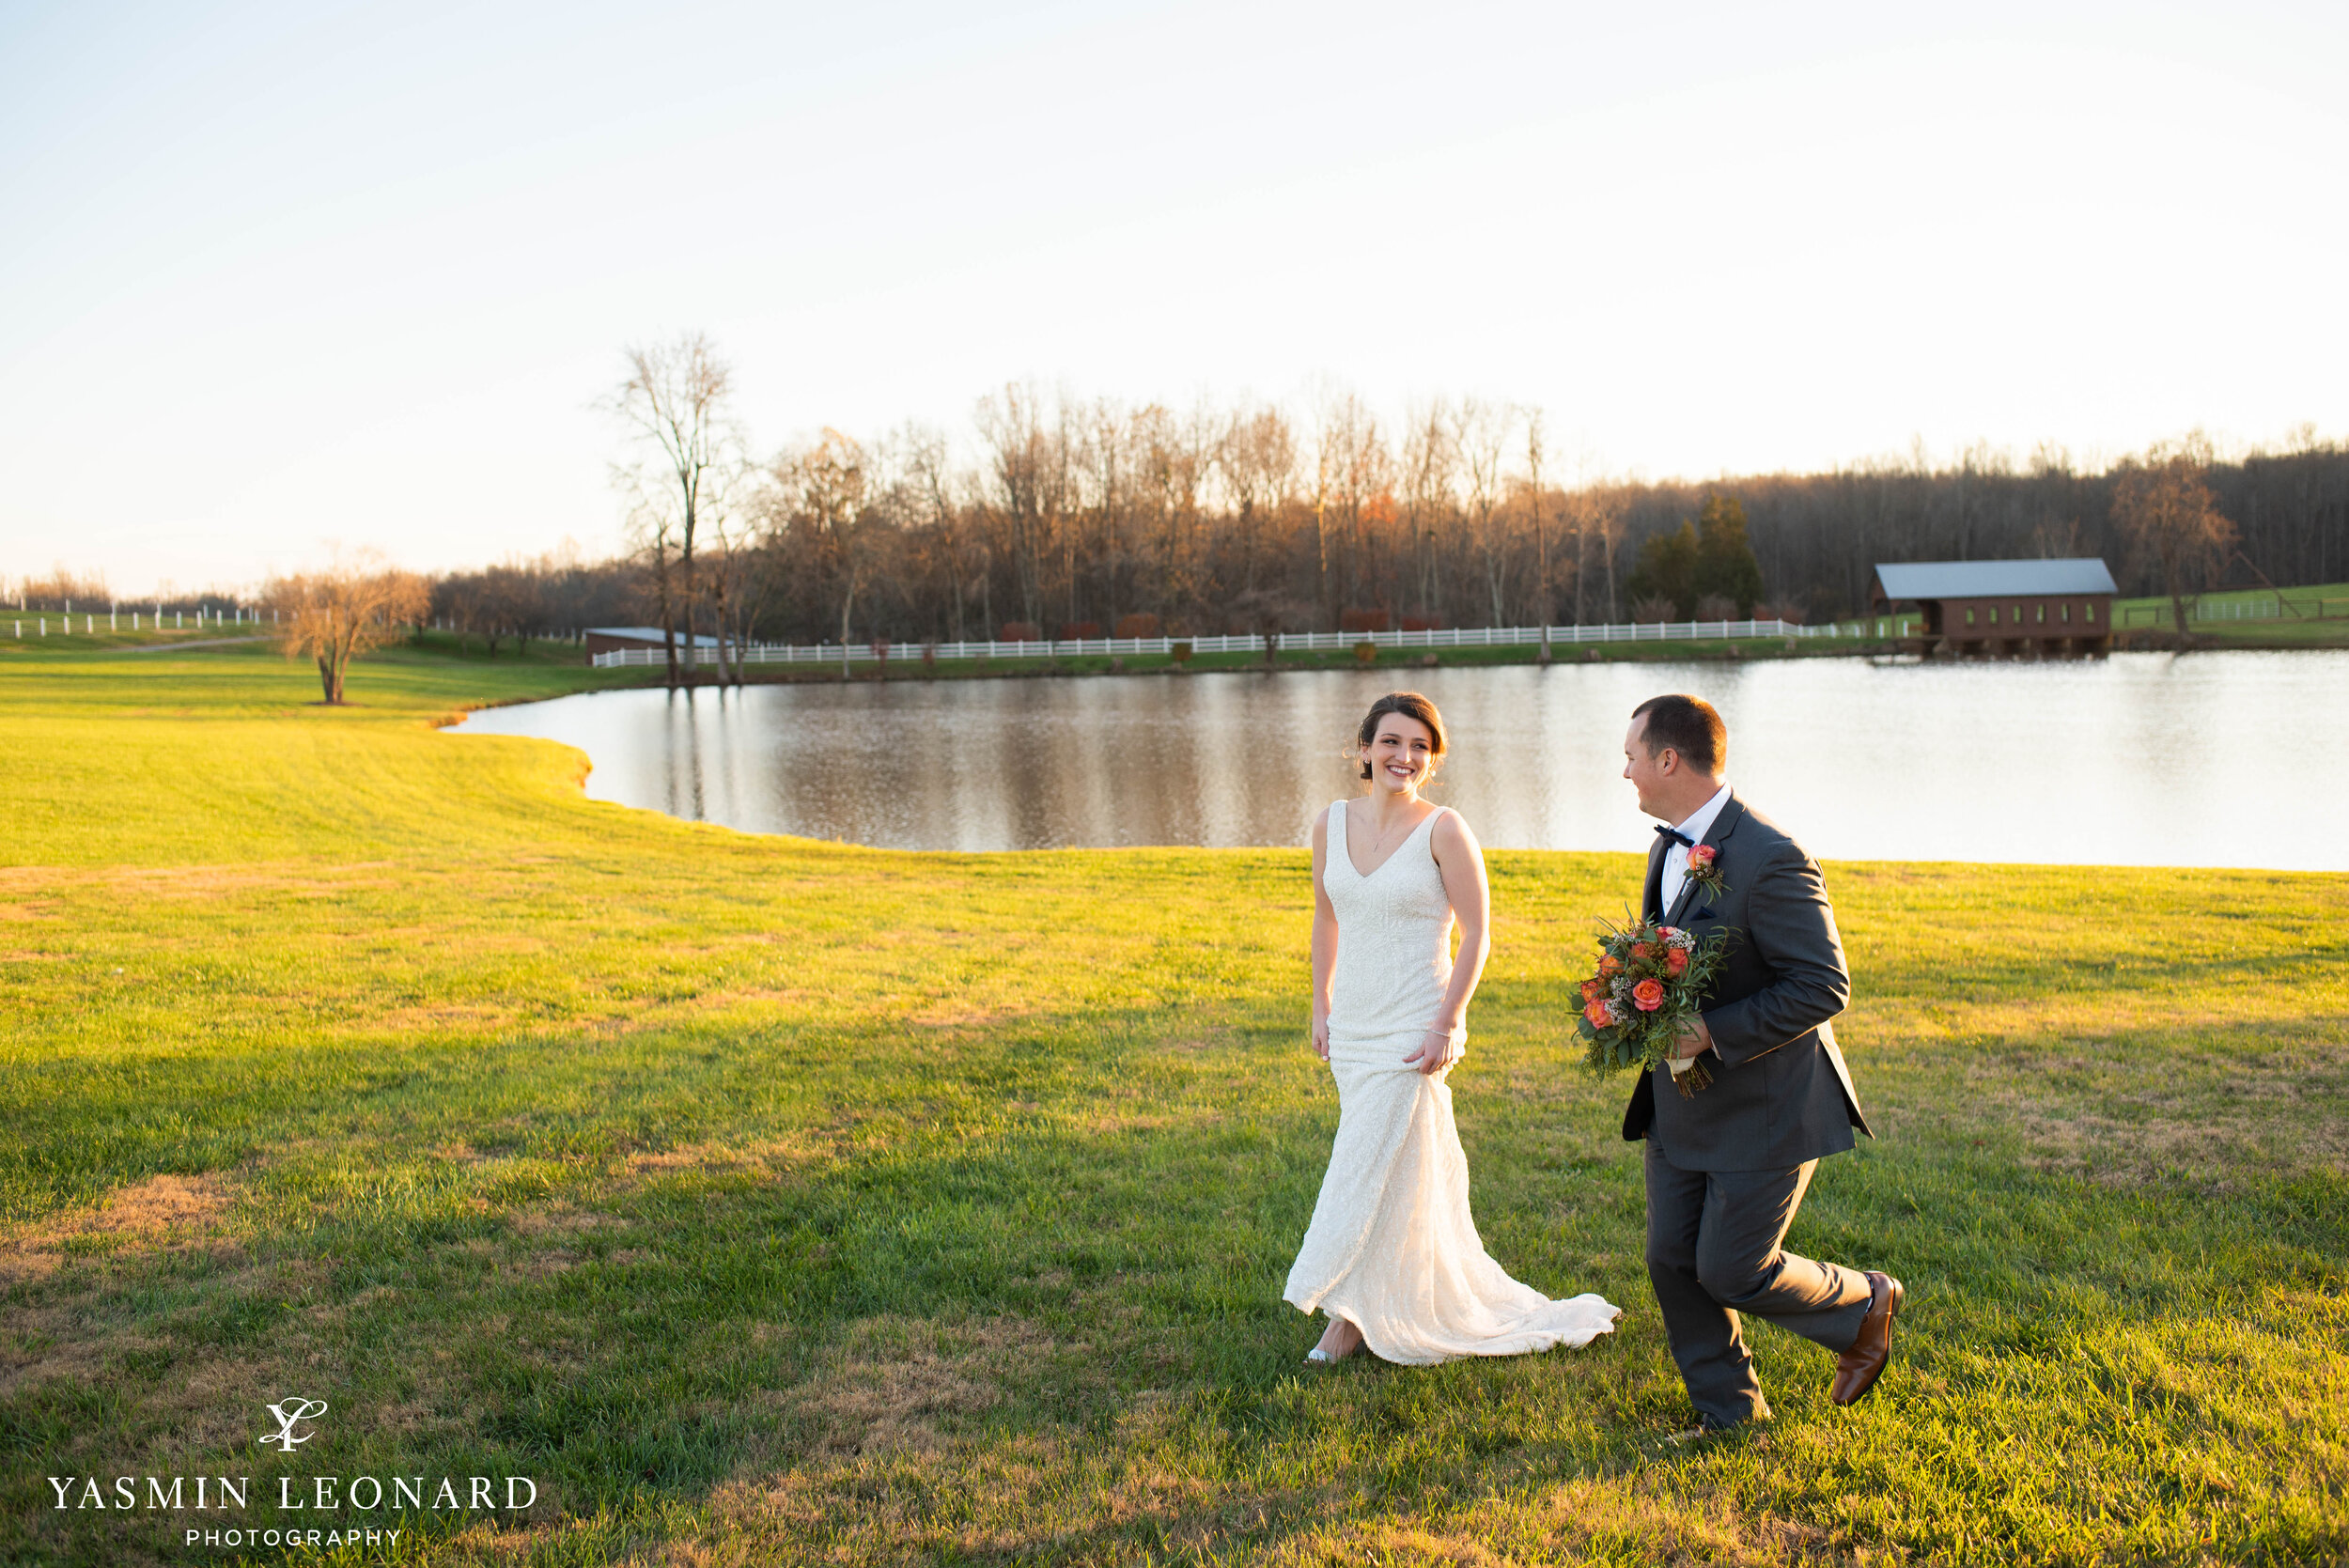 Jared and Katy - Adaumont Farms - High Point Weddings - NC Barn Weddings - Yasmin Leonard Photography-36.jpg